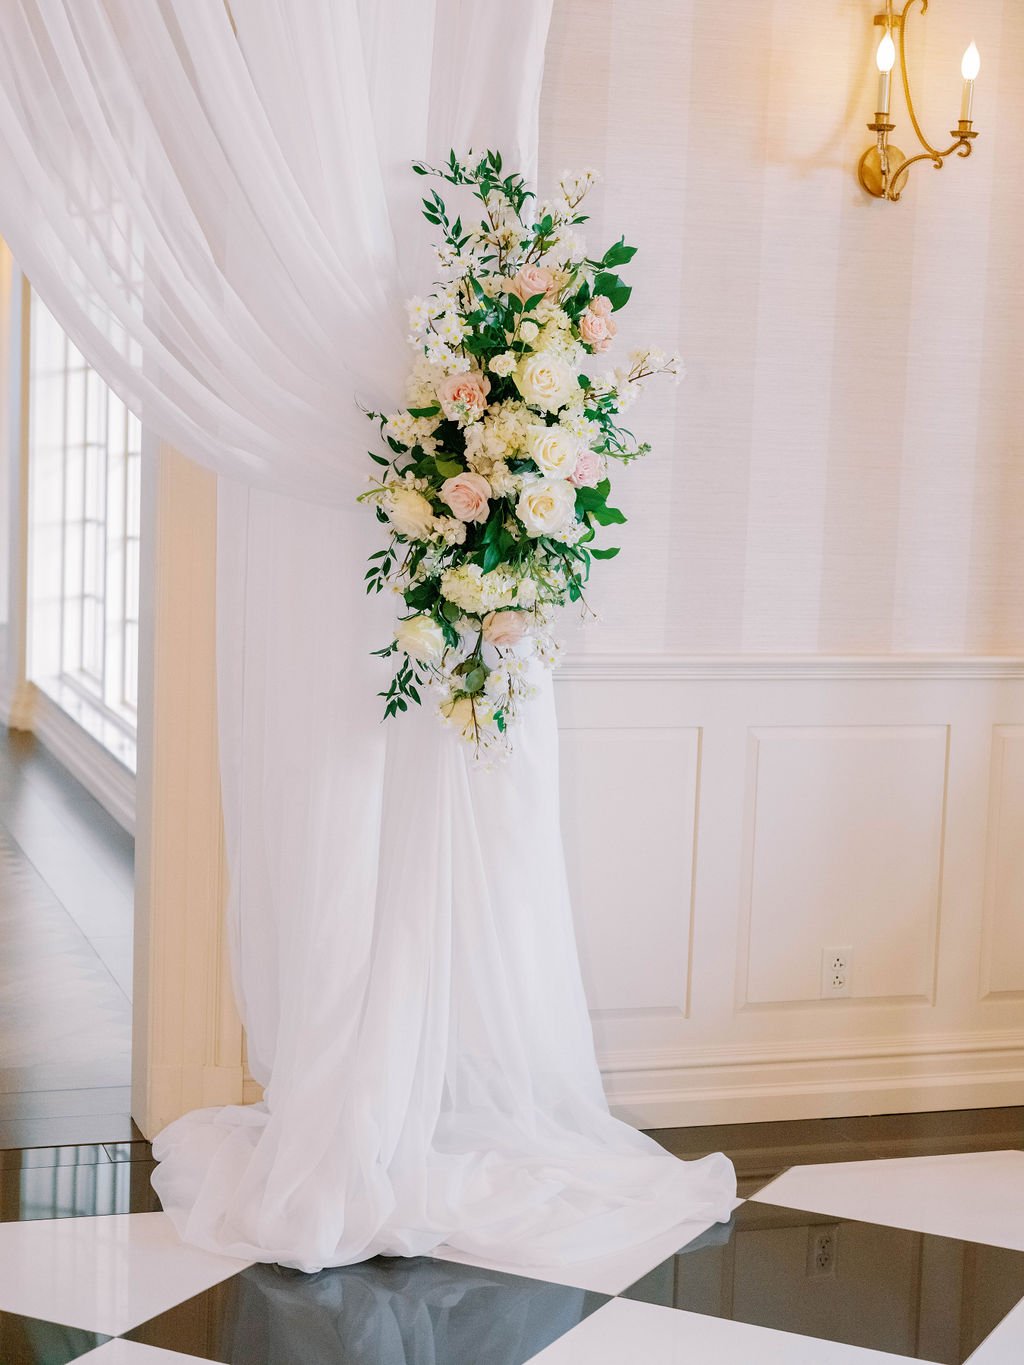 Belli-Fiori-St-Louis-Wedding-Florist-sarahharvey_297362.JPG